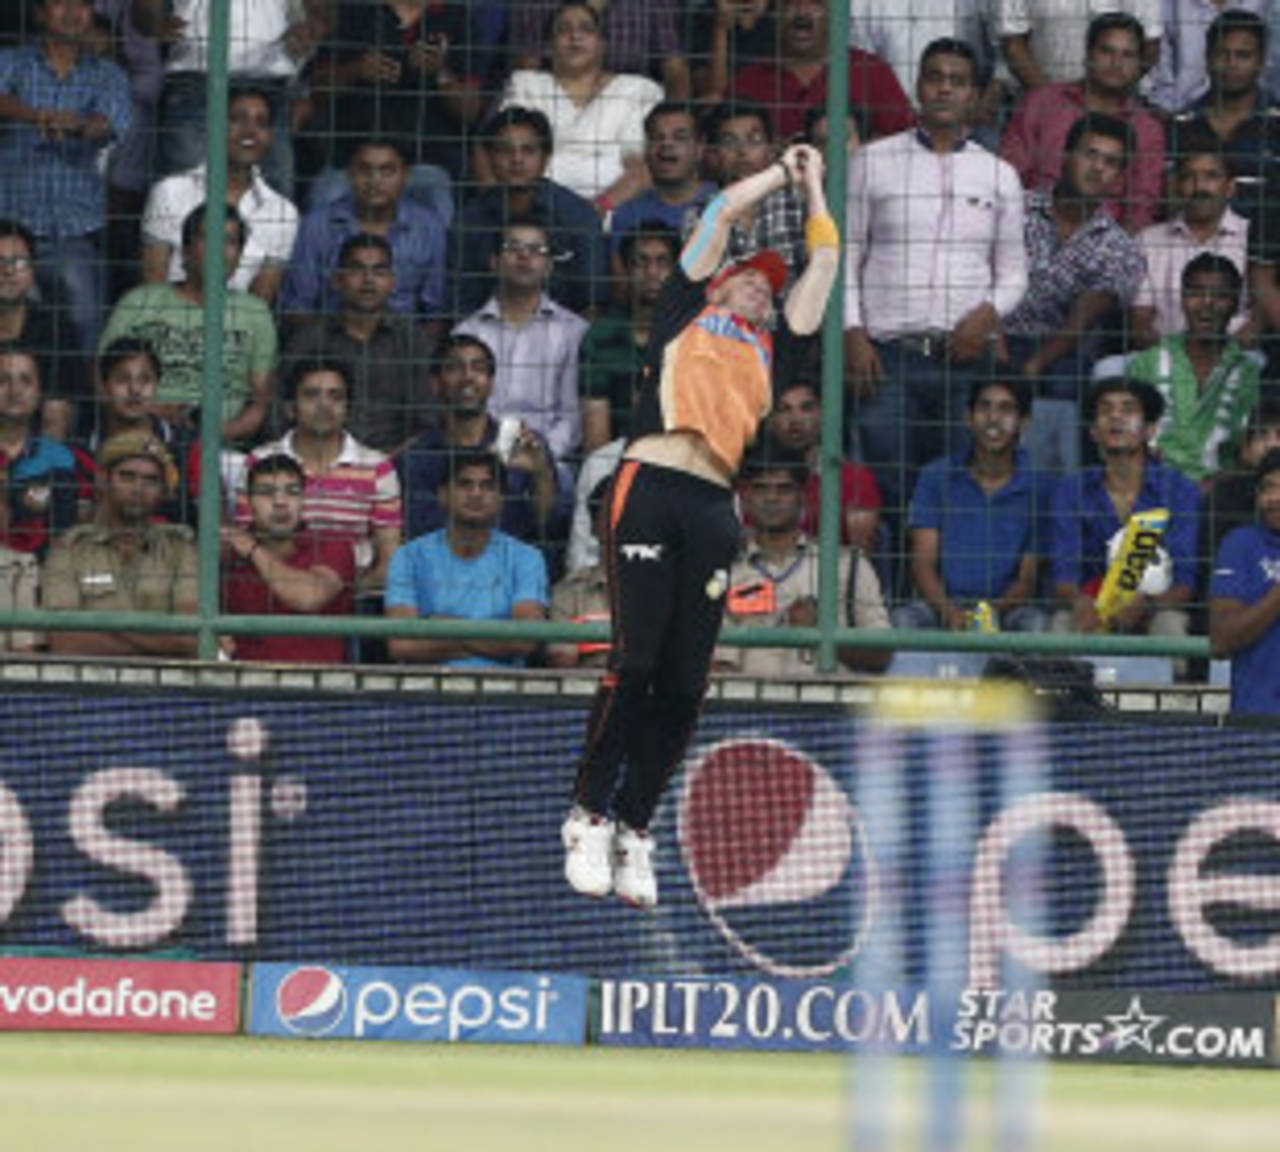 Dale Steyn took a stunning catch at the boundary to dismiss Dinesh Karthik, Delhi Daredevils v Sunrisers Hyderabad, IPL 2014, Delhi, May 10, 2014